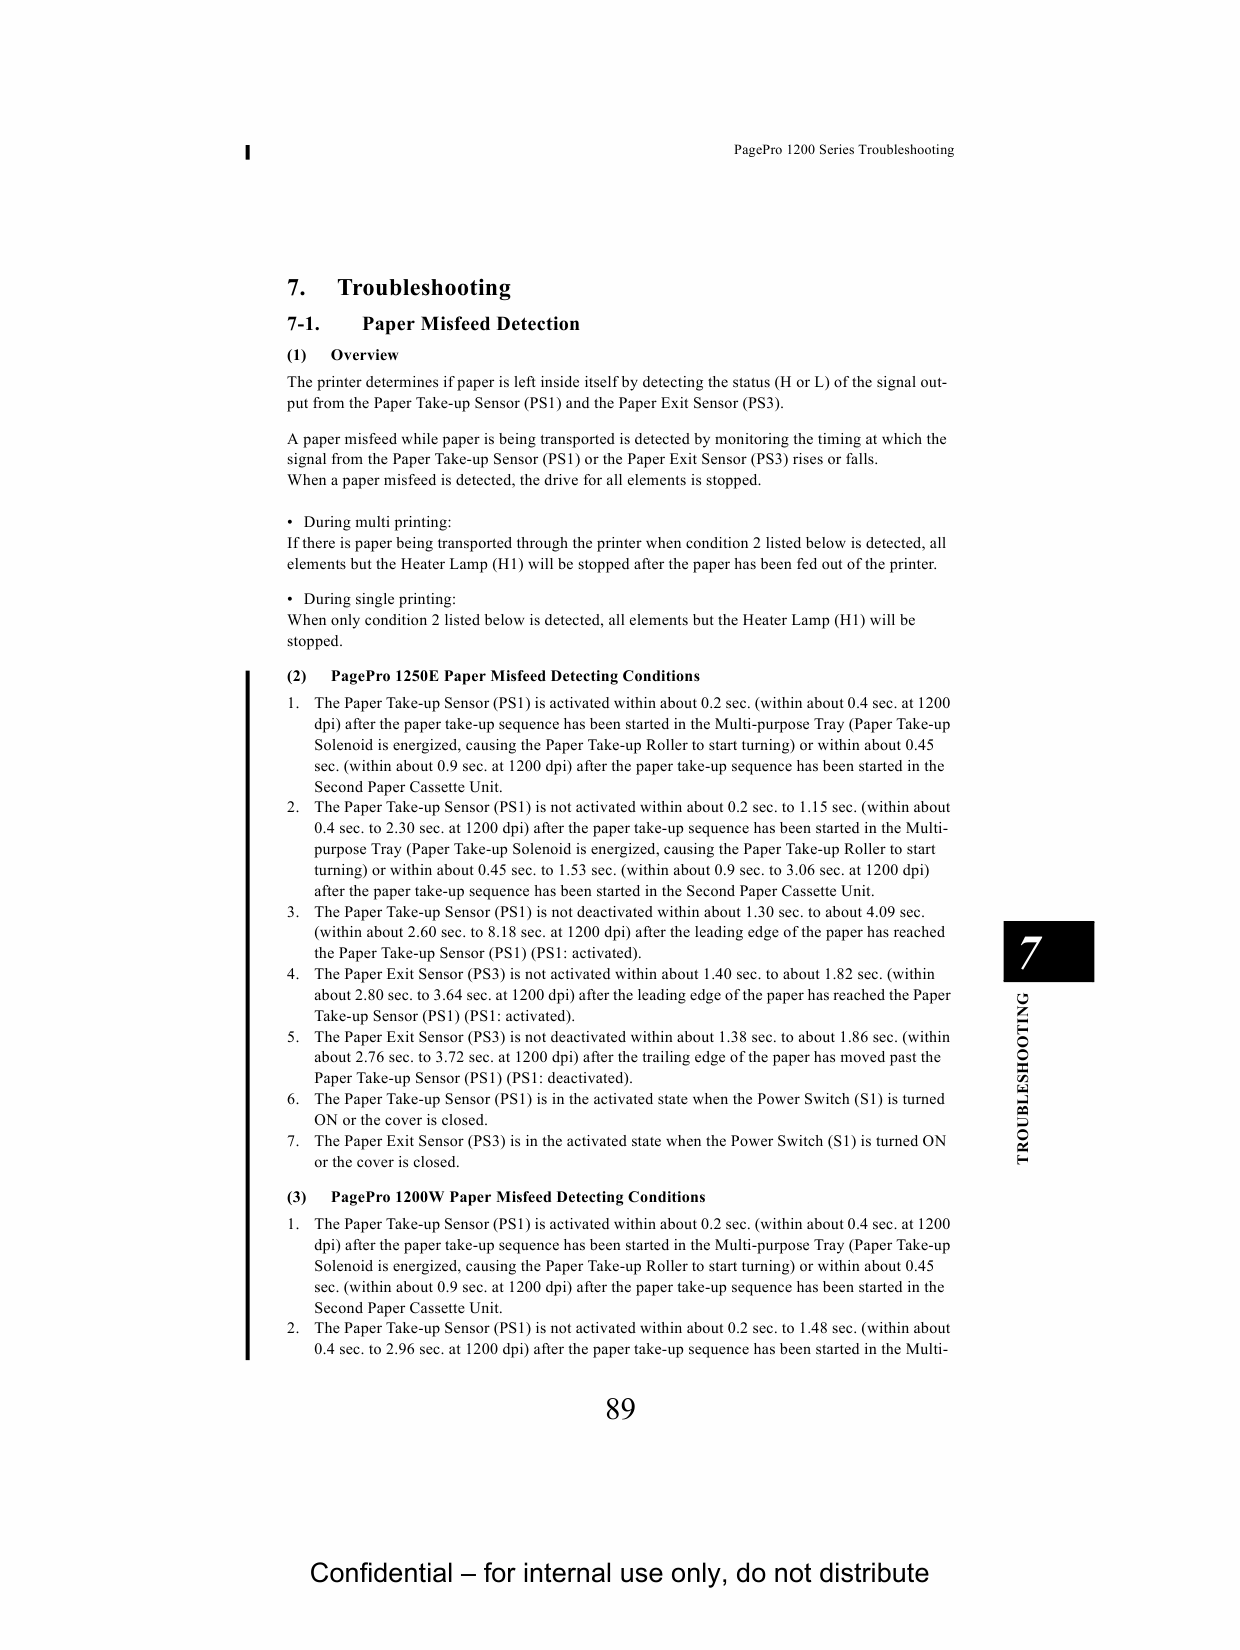 Konica-Minolta pagepro 1200 Service Manual-5